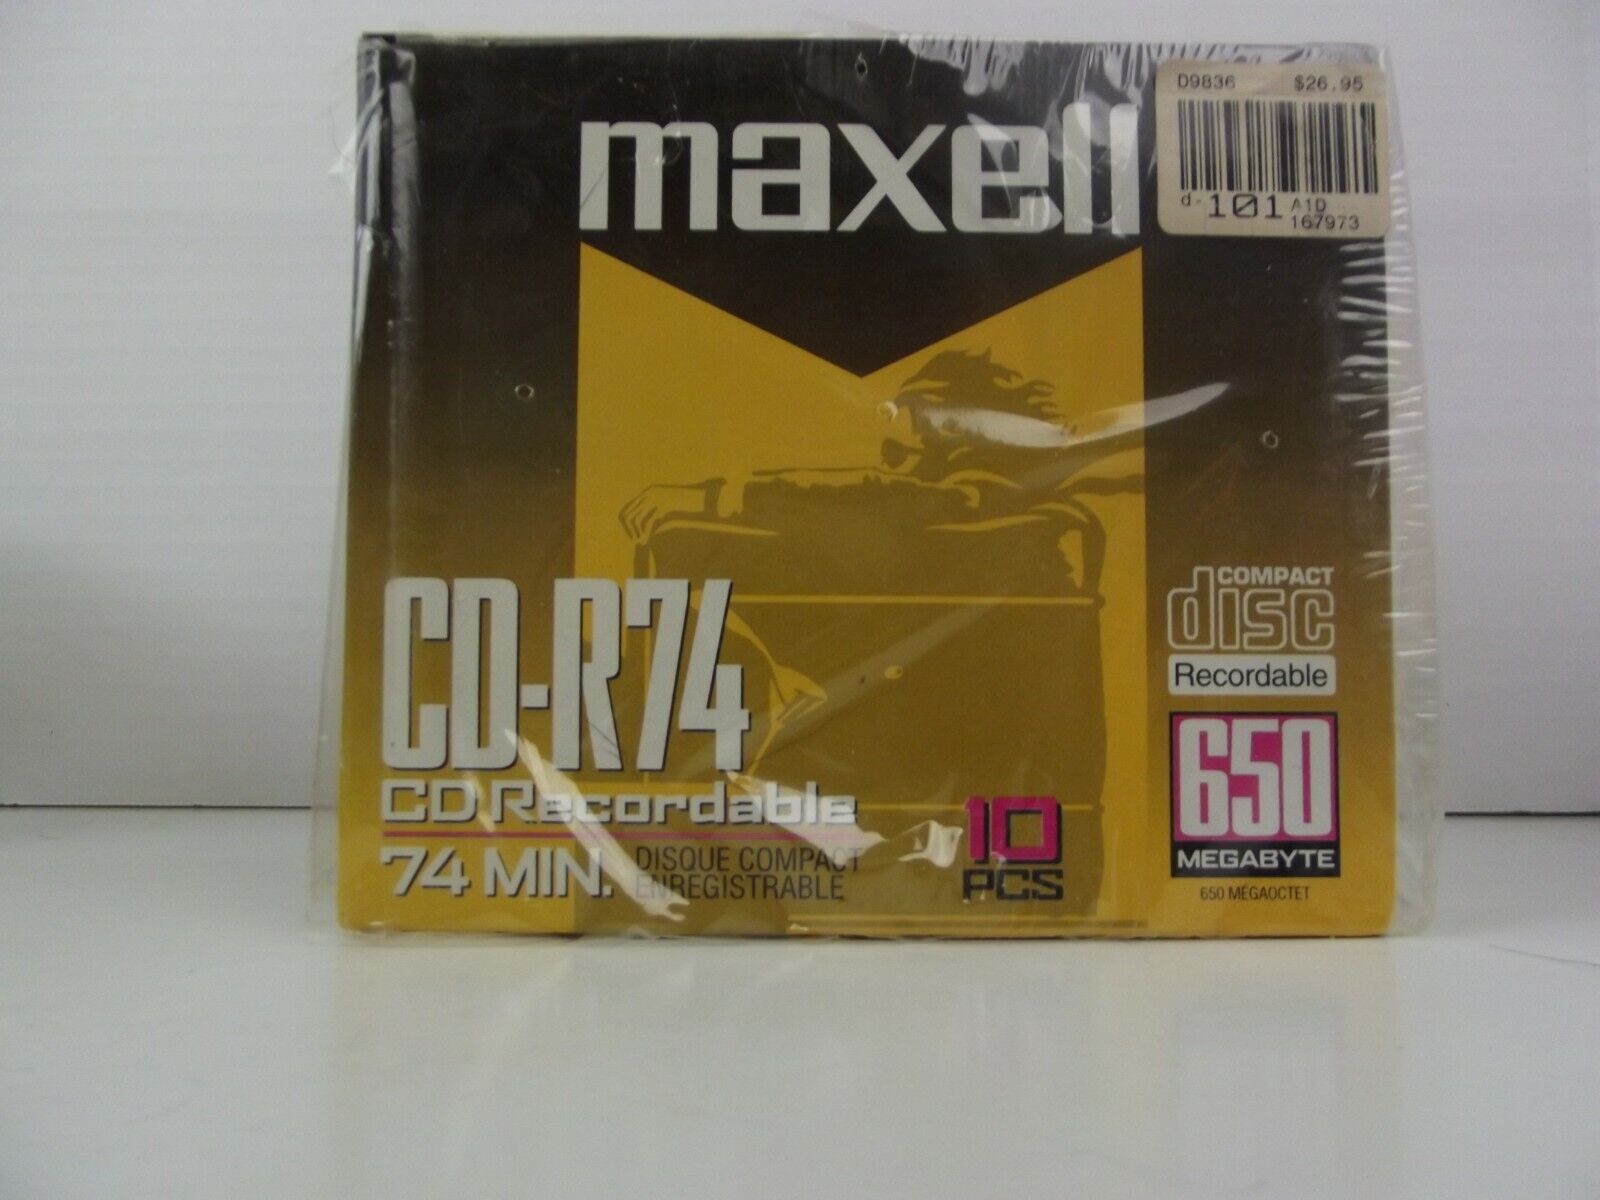 VTG New Maxell CD-R74 CD Recordable 650 MB Megabyte 74 Minute Run Time 10 Pack